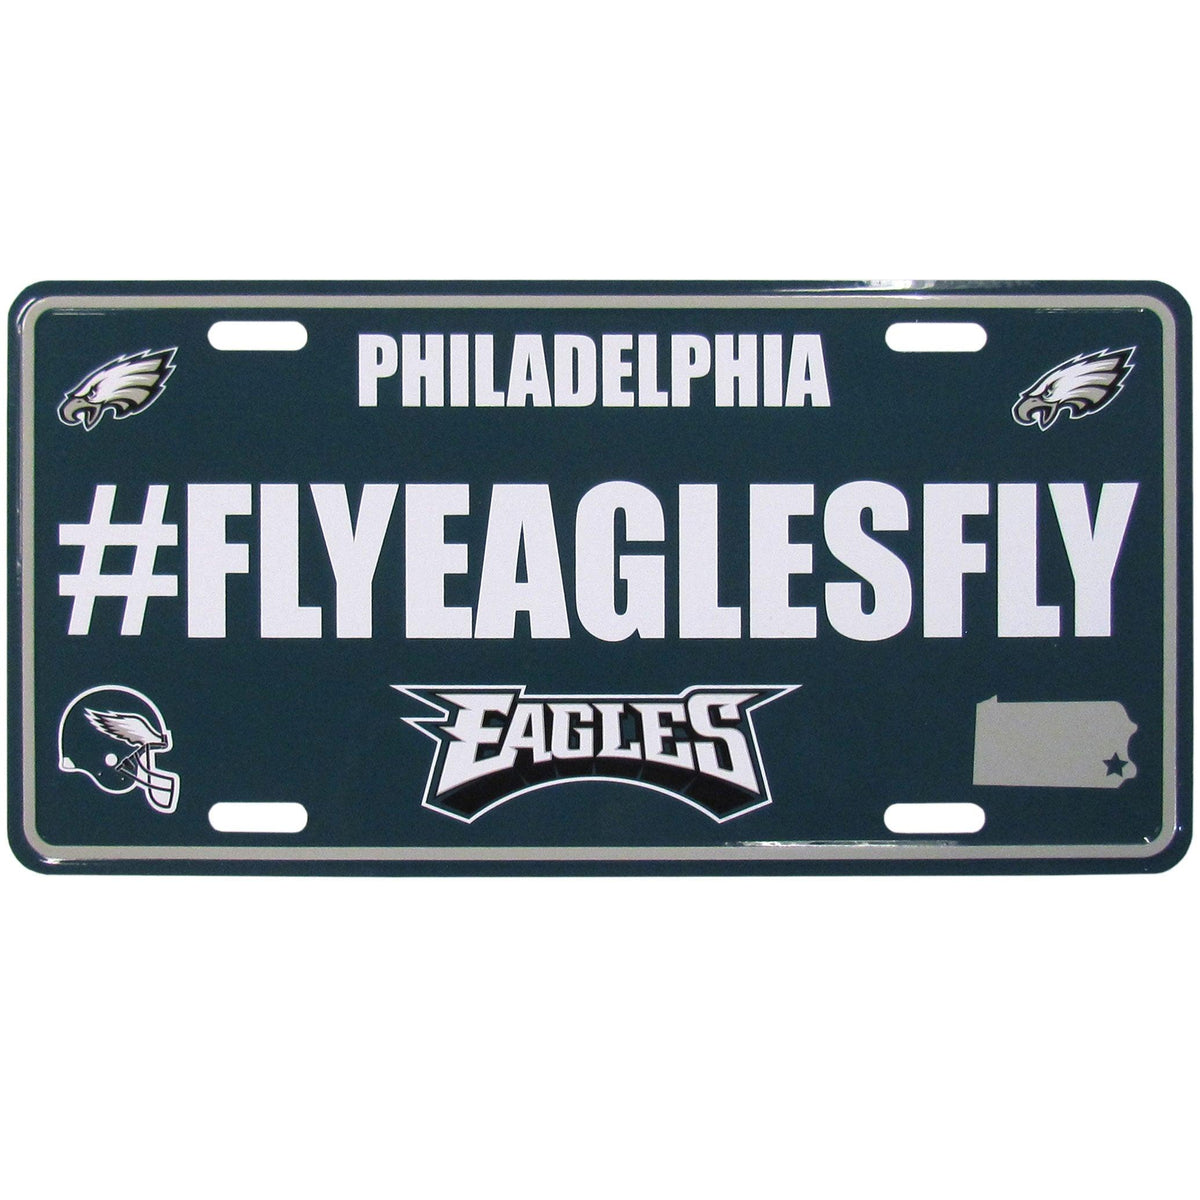 Philadelphia Eagles Hashtag License Plate - Flyclothing LLC